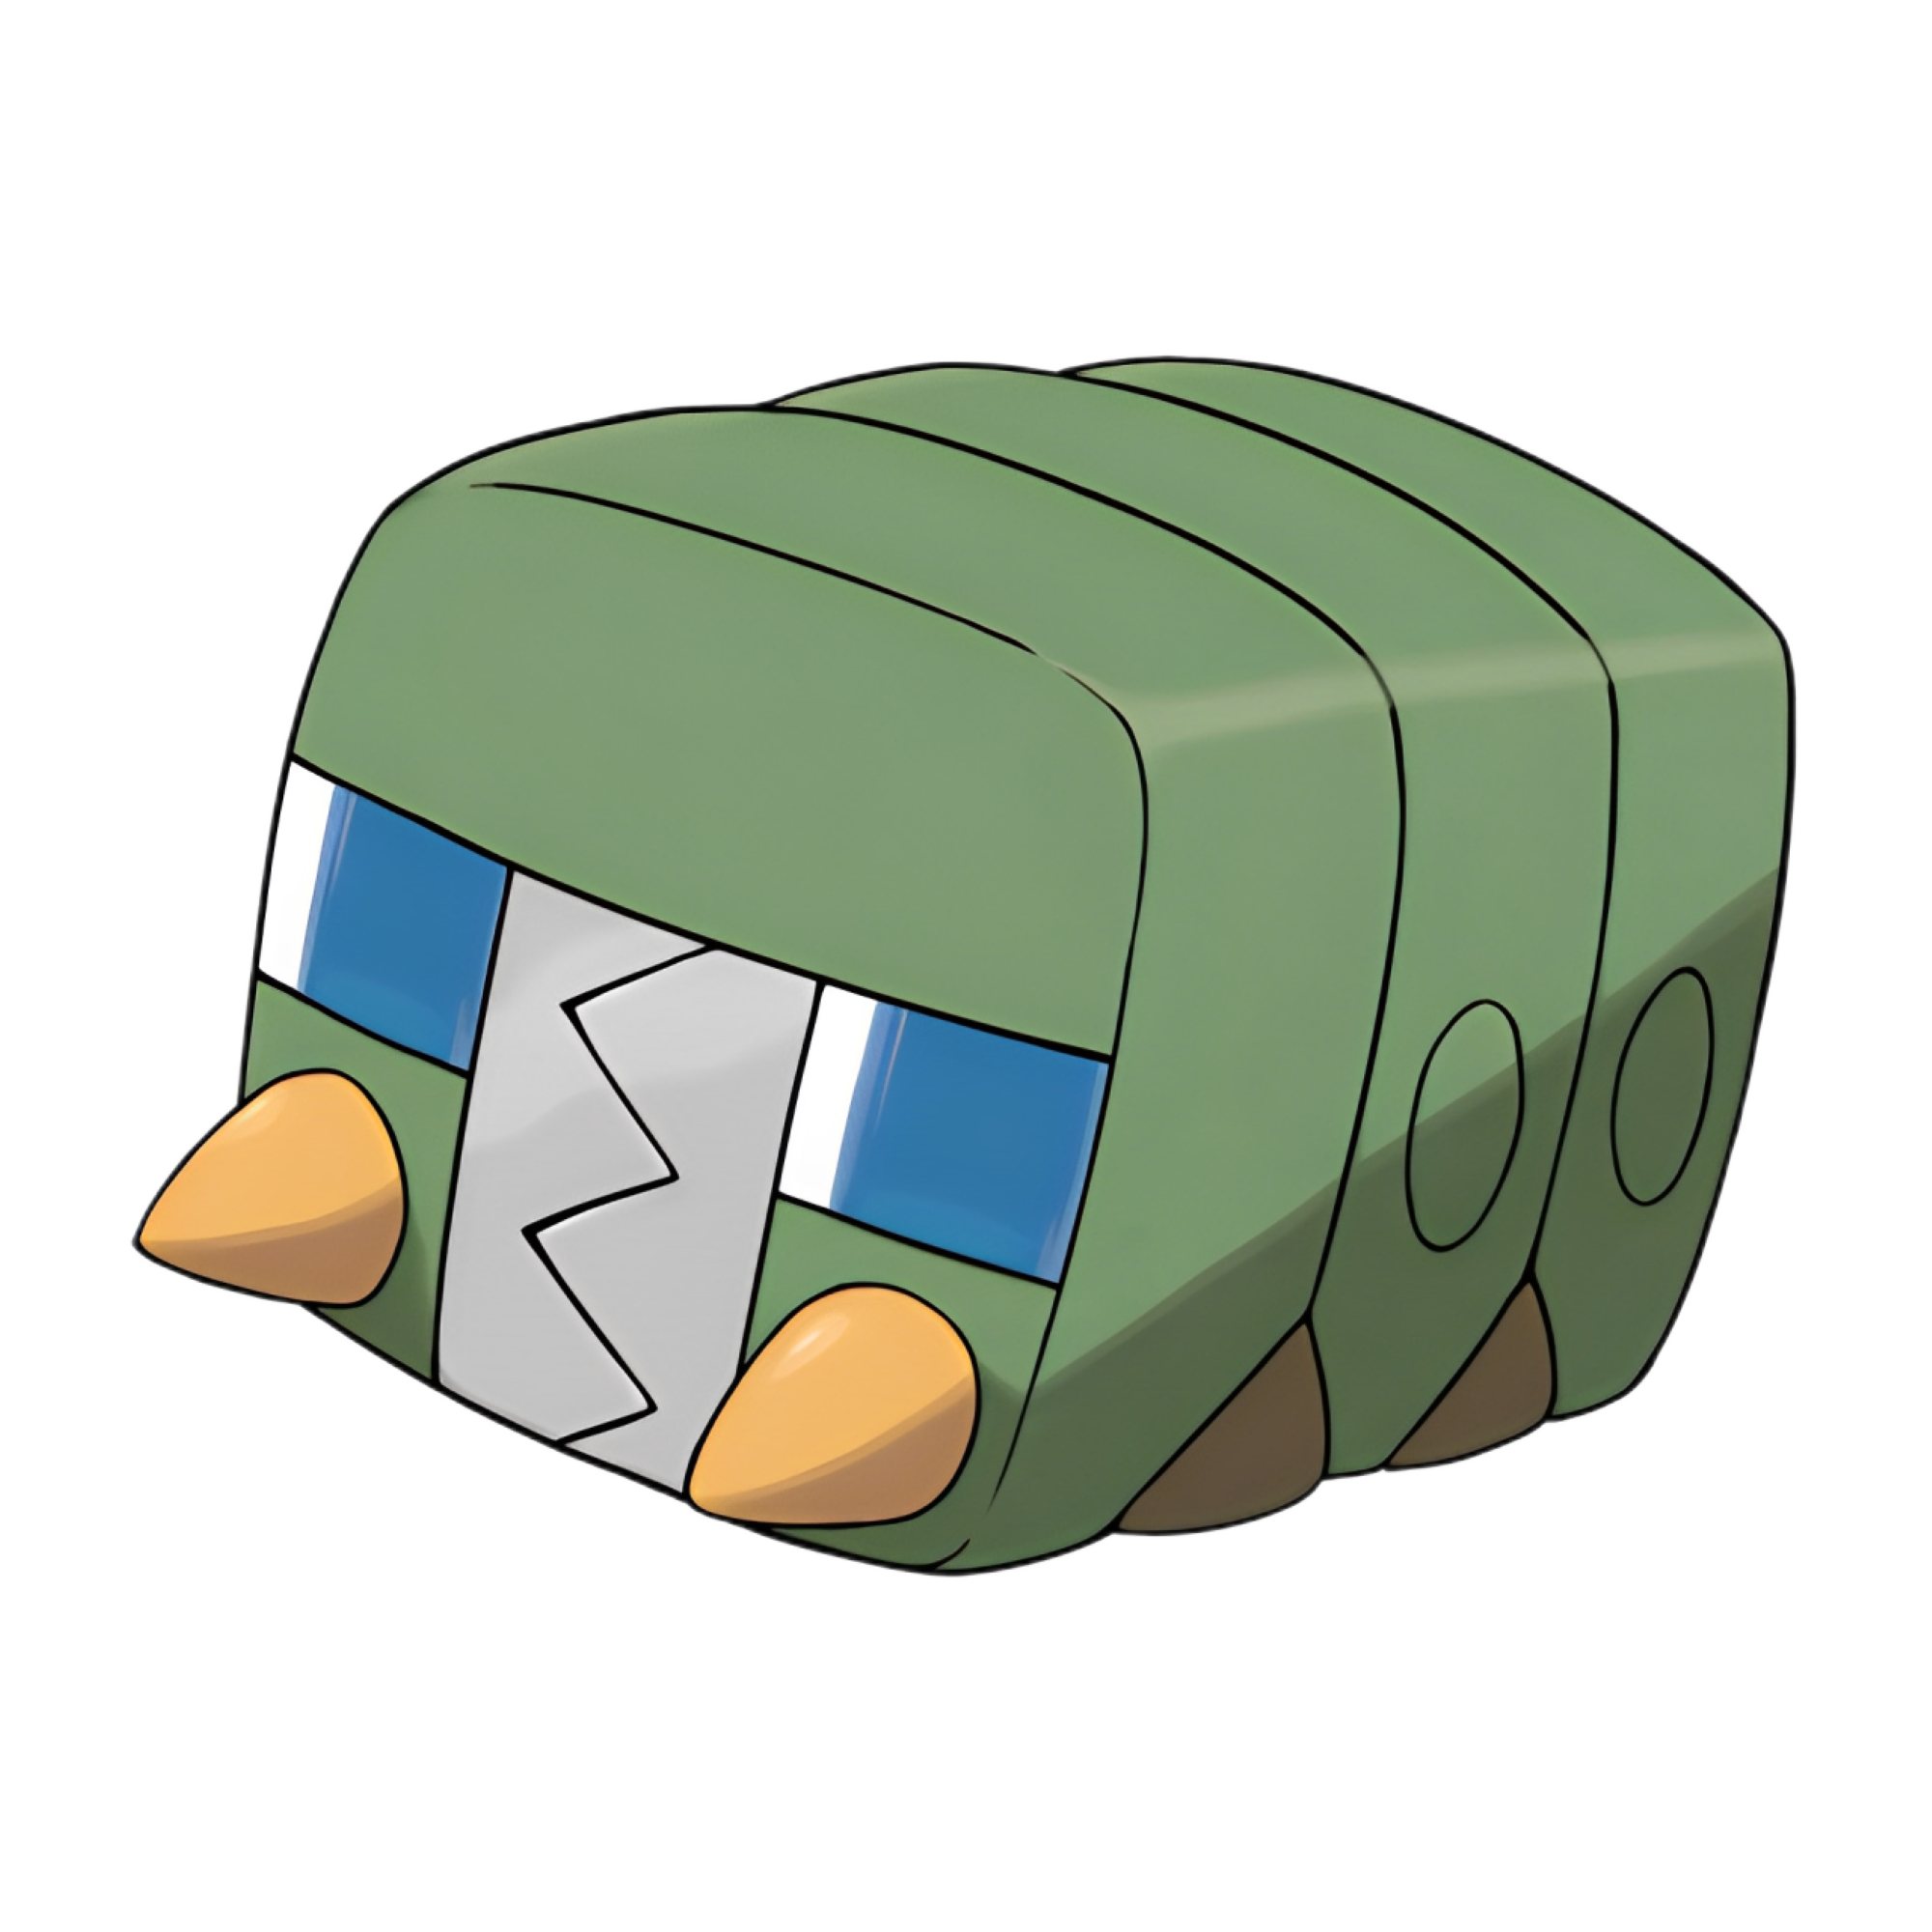 Poipole (Pokémon) - Bulbapedia, the community-driven Pokémon